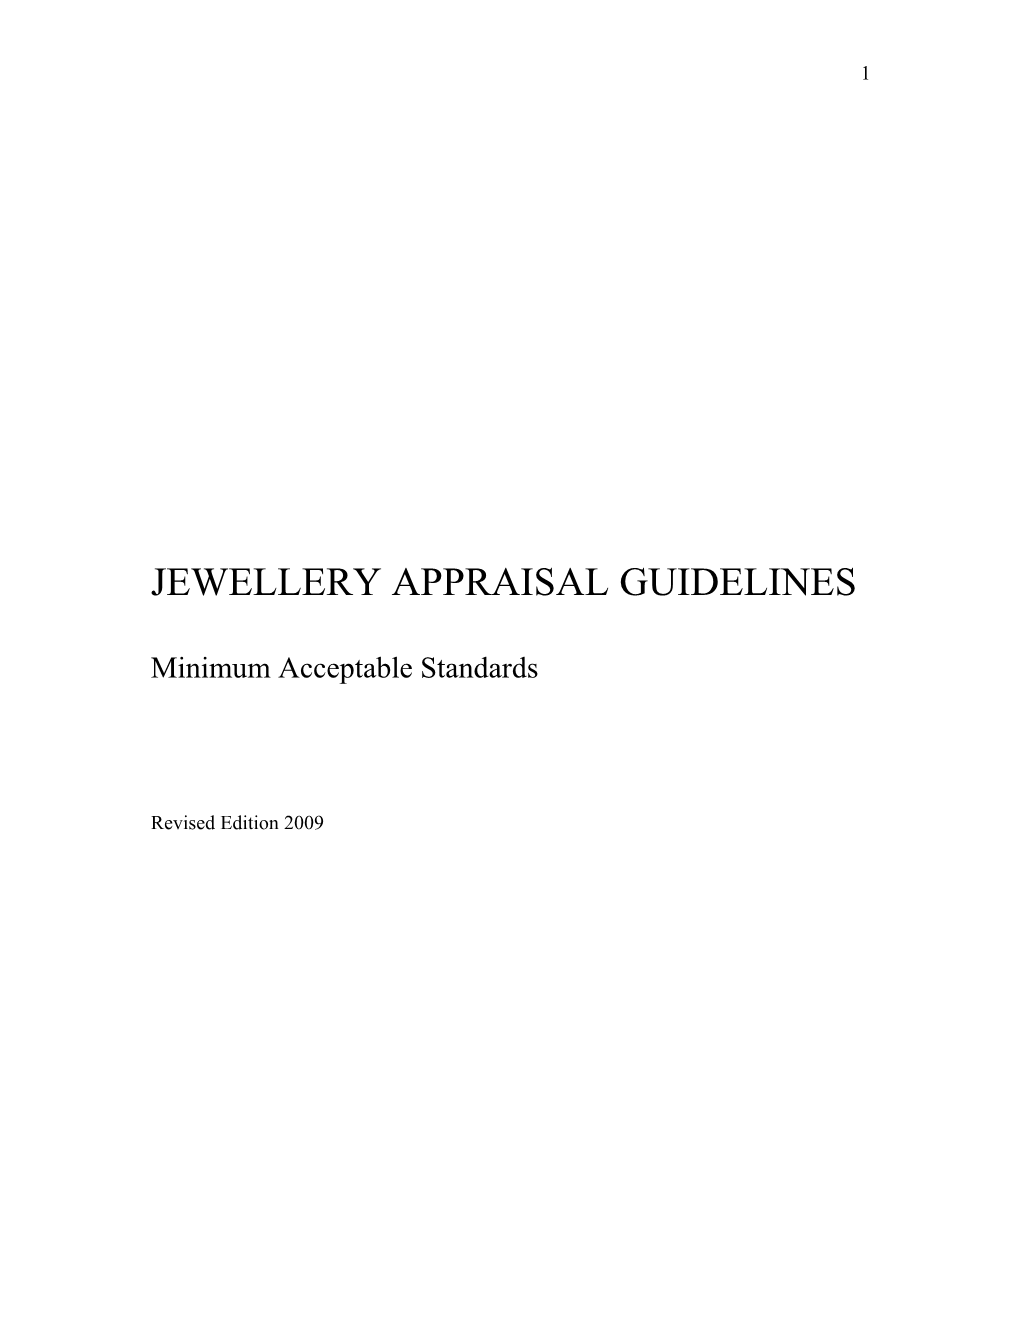 Jewellery Appraisal Guidelines